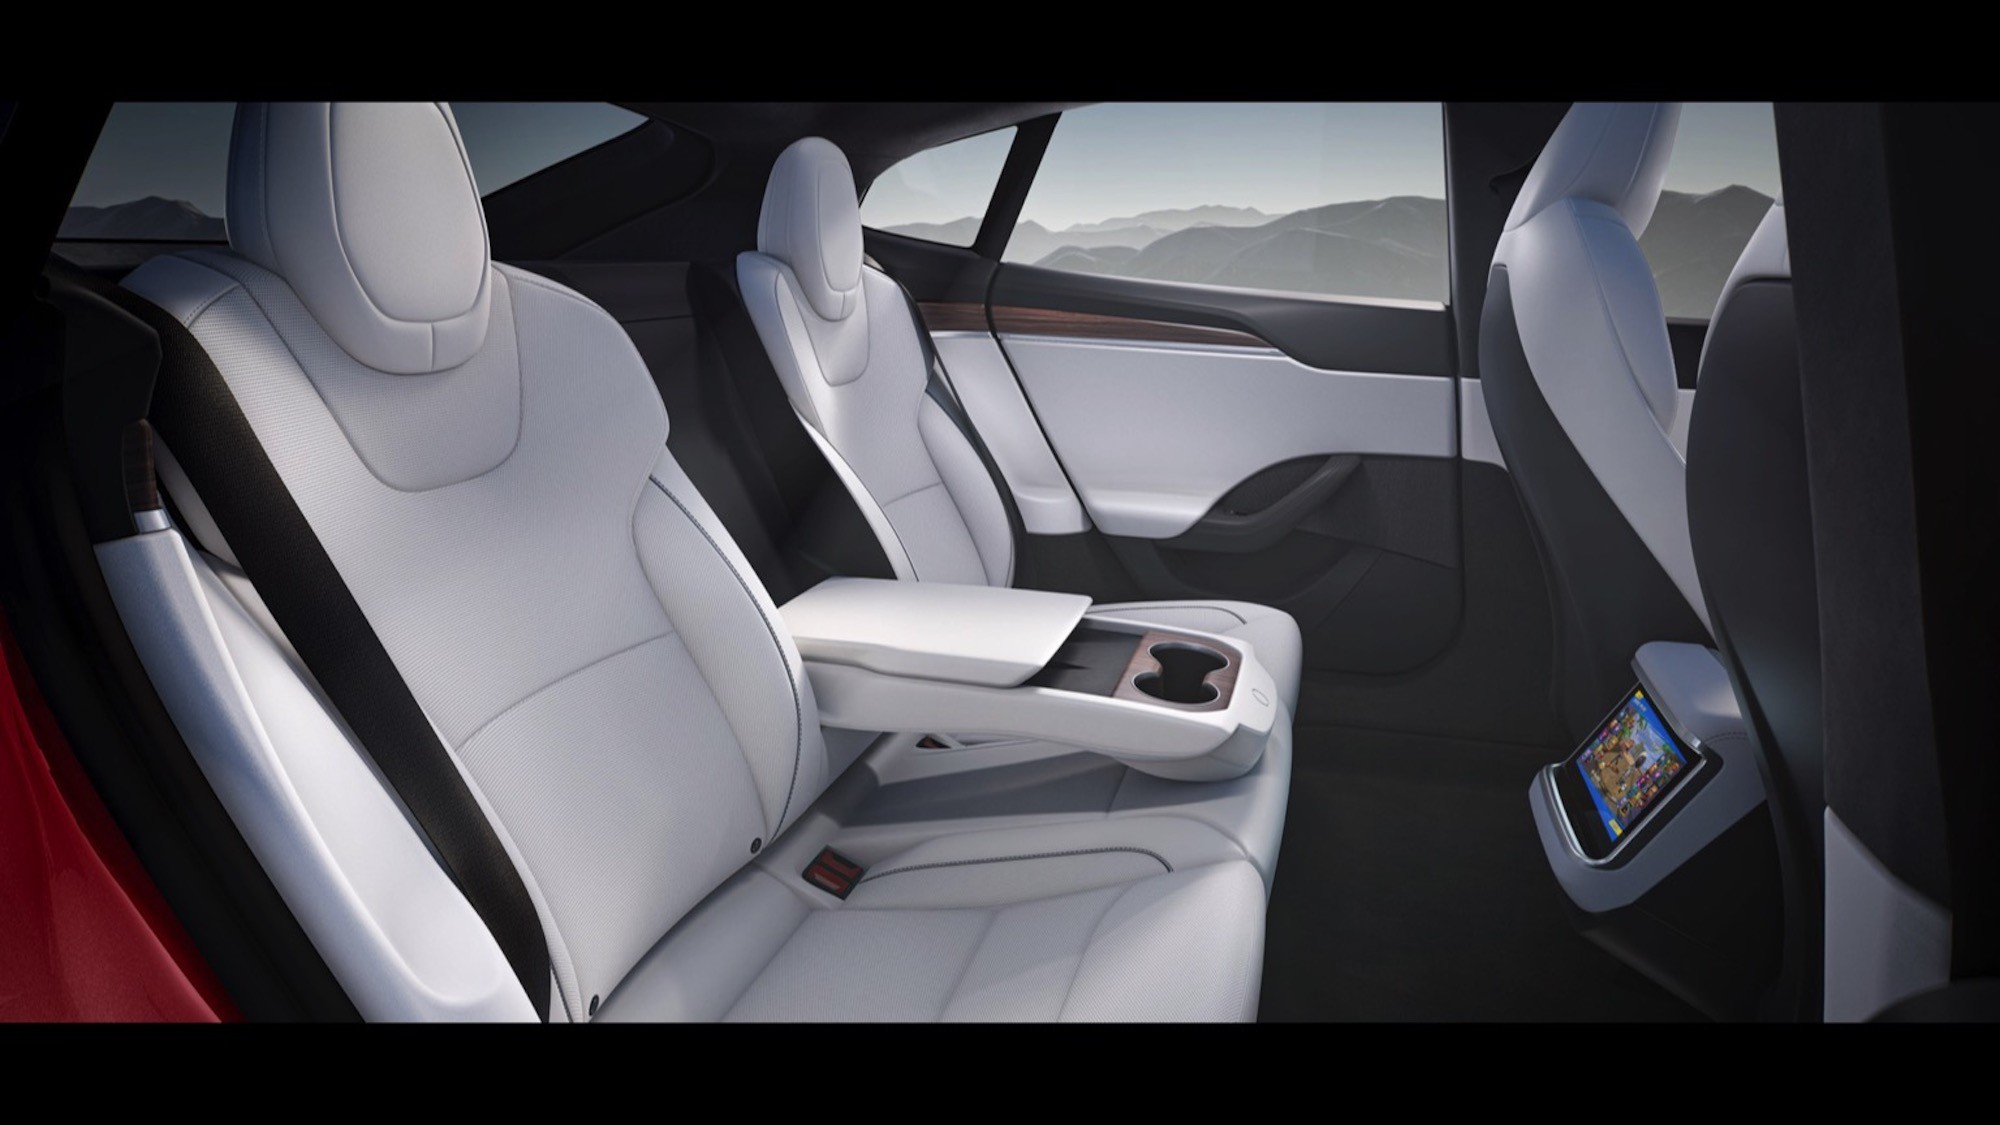 Tesla Model S Plaid finally achieves 322 km/h speed with new brakes, ET Auto